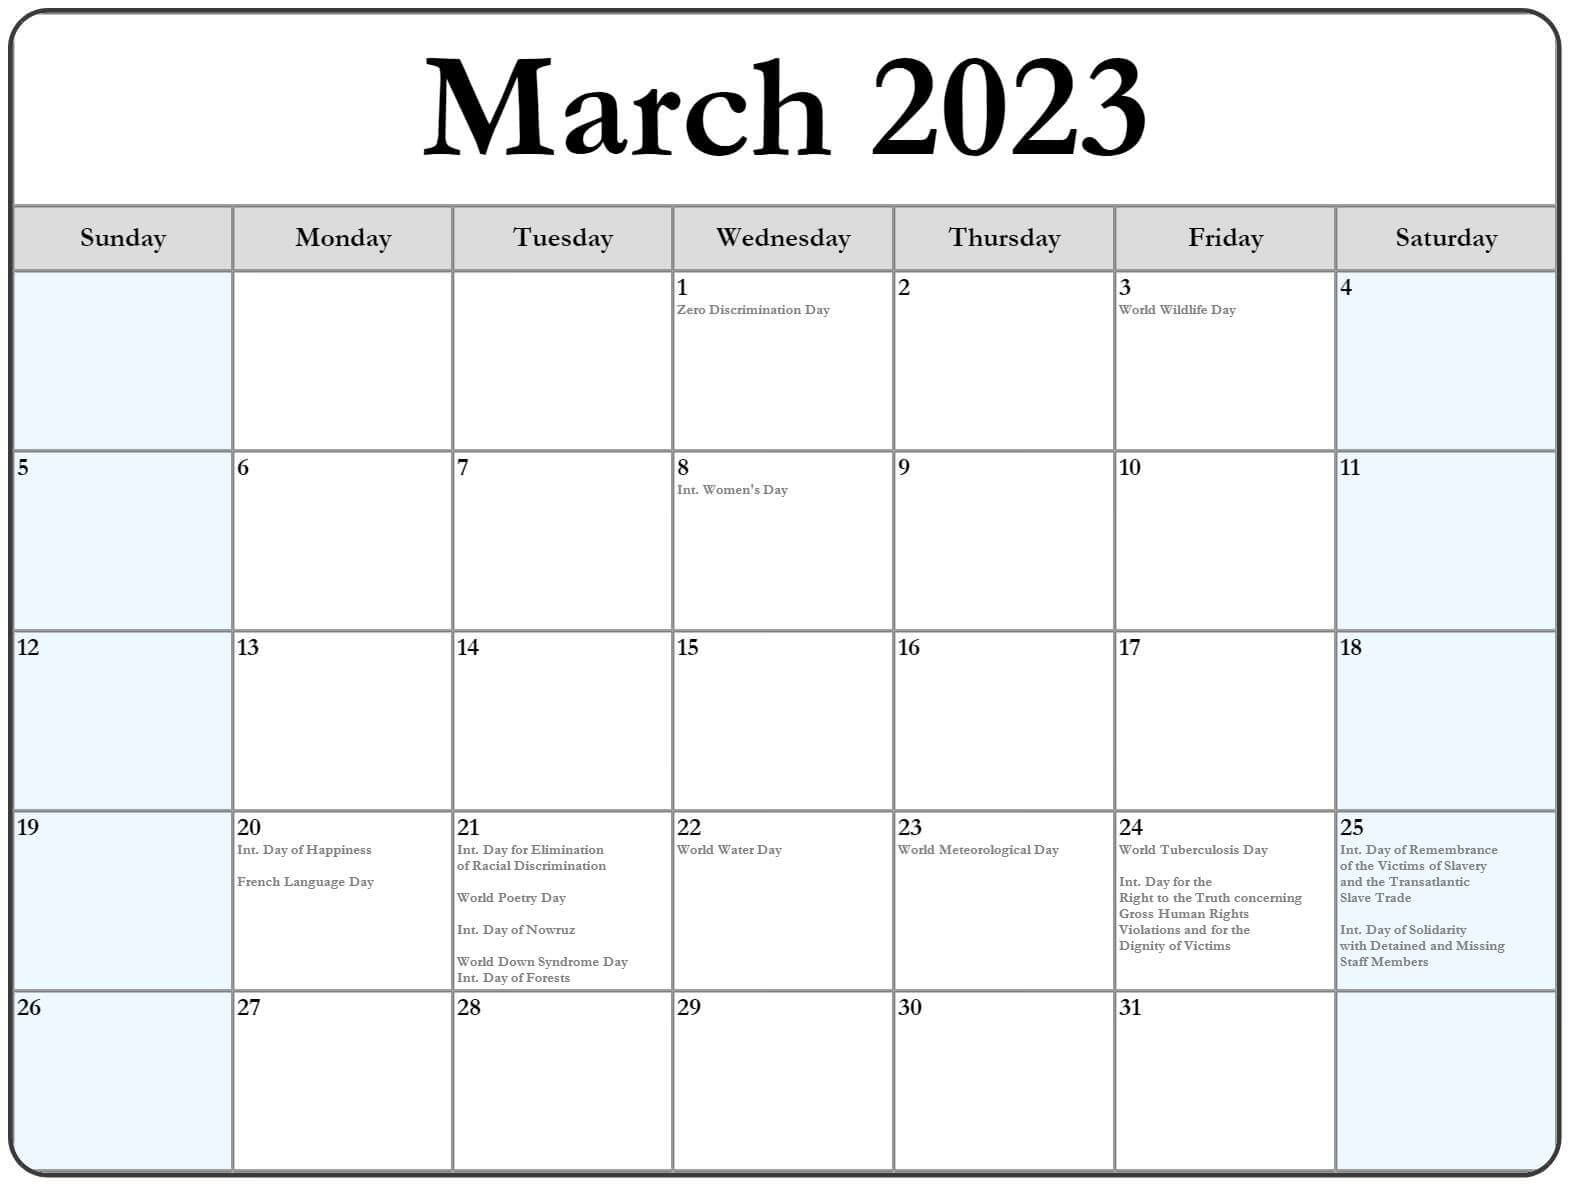 2023 March Holidays Calendar